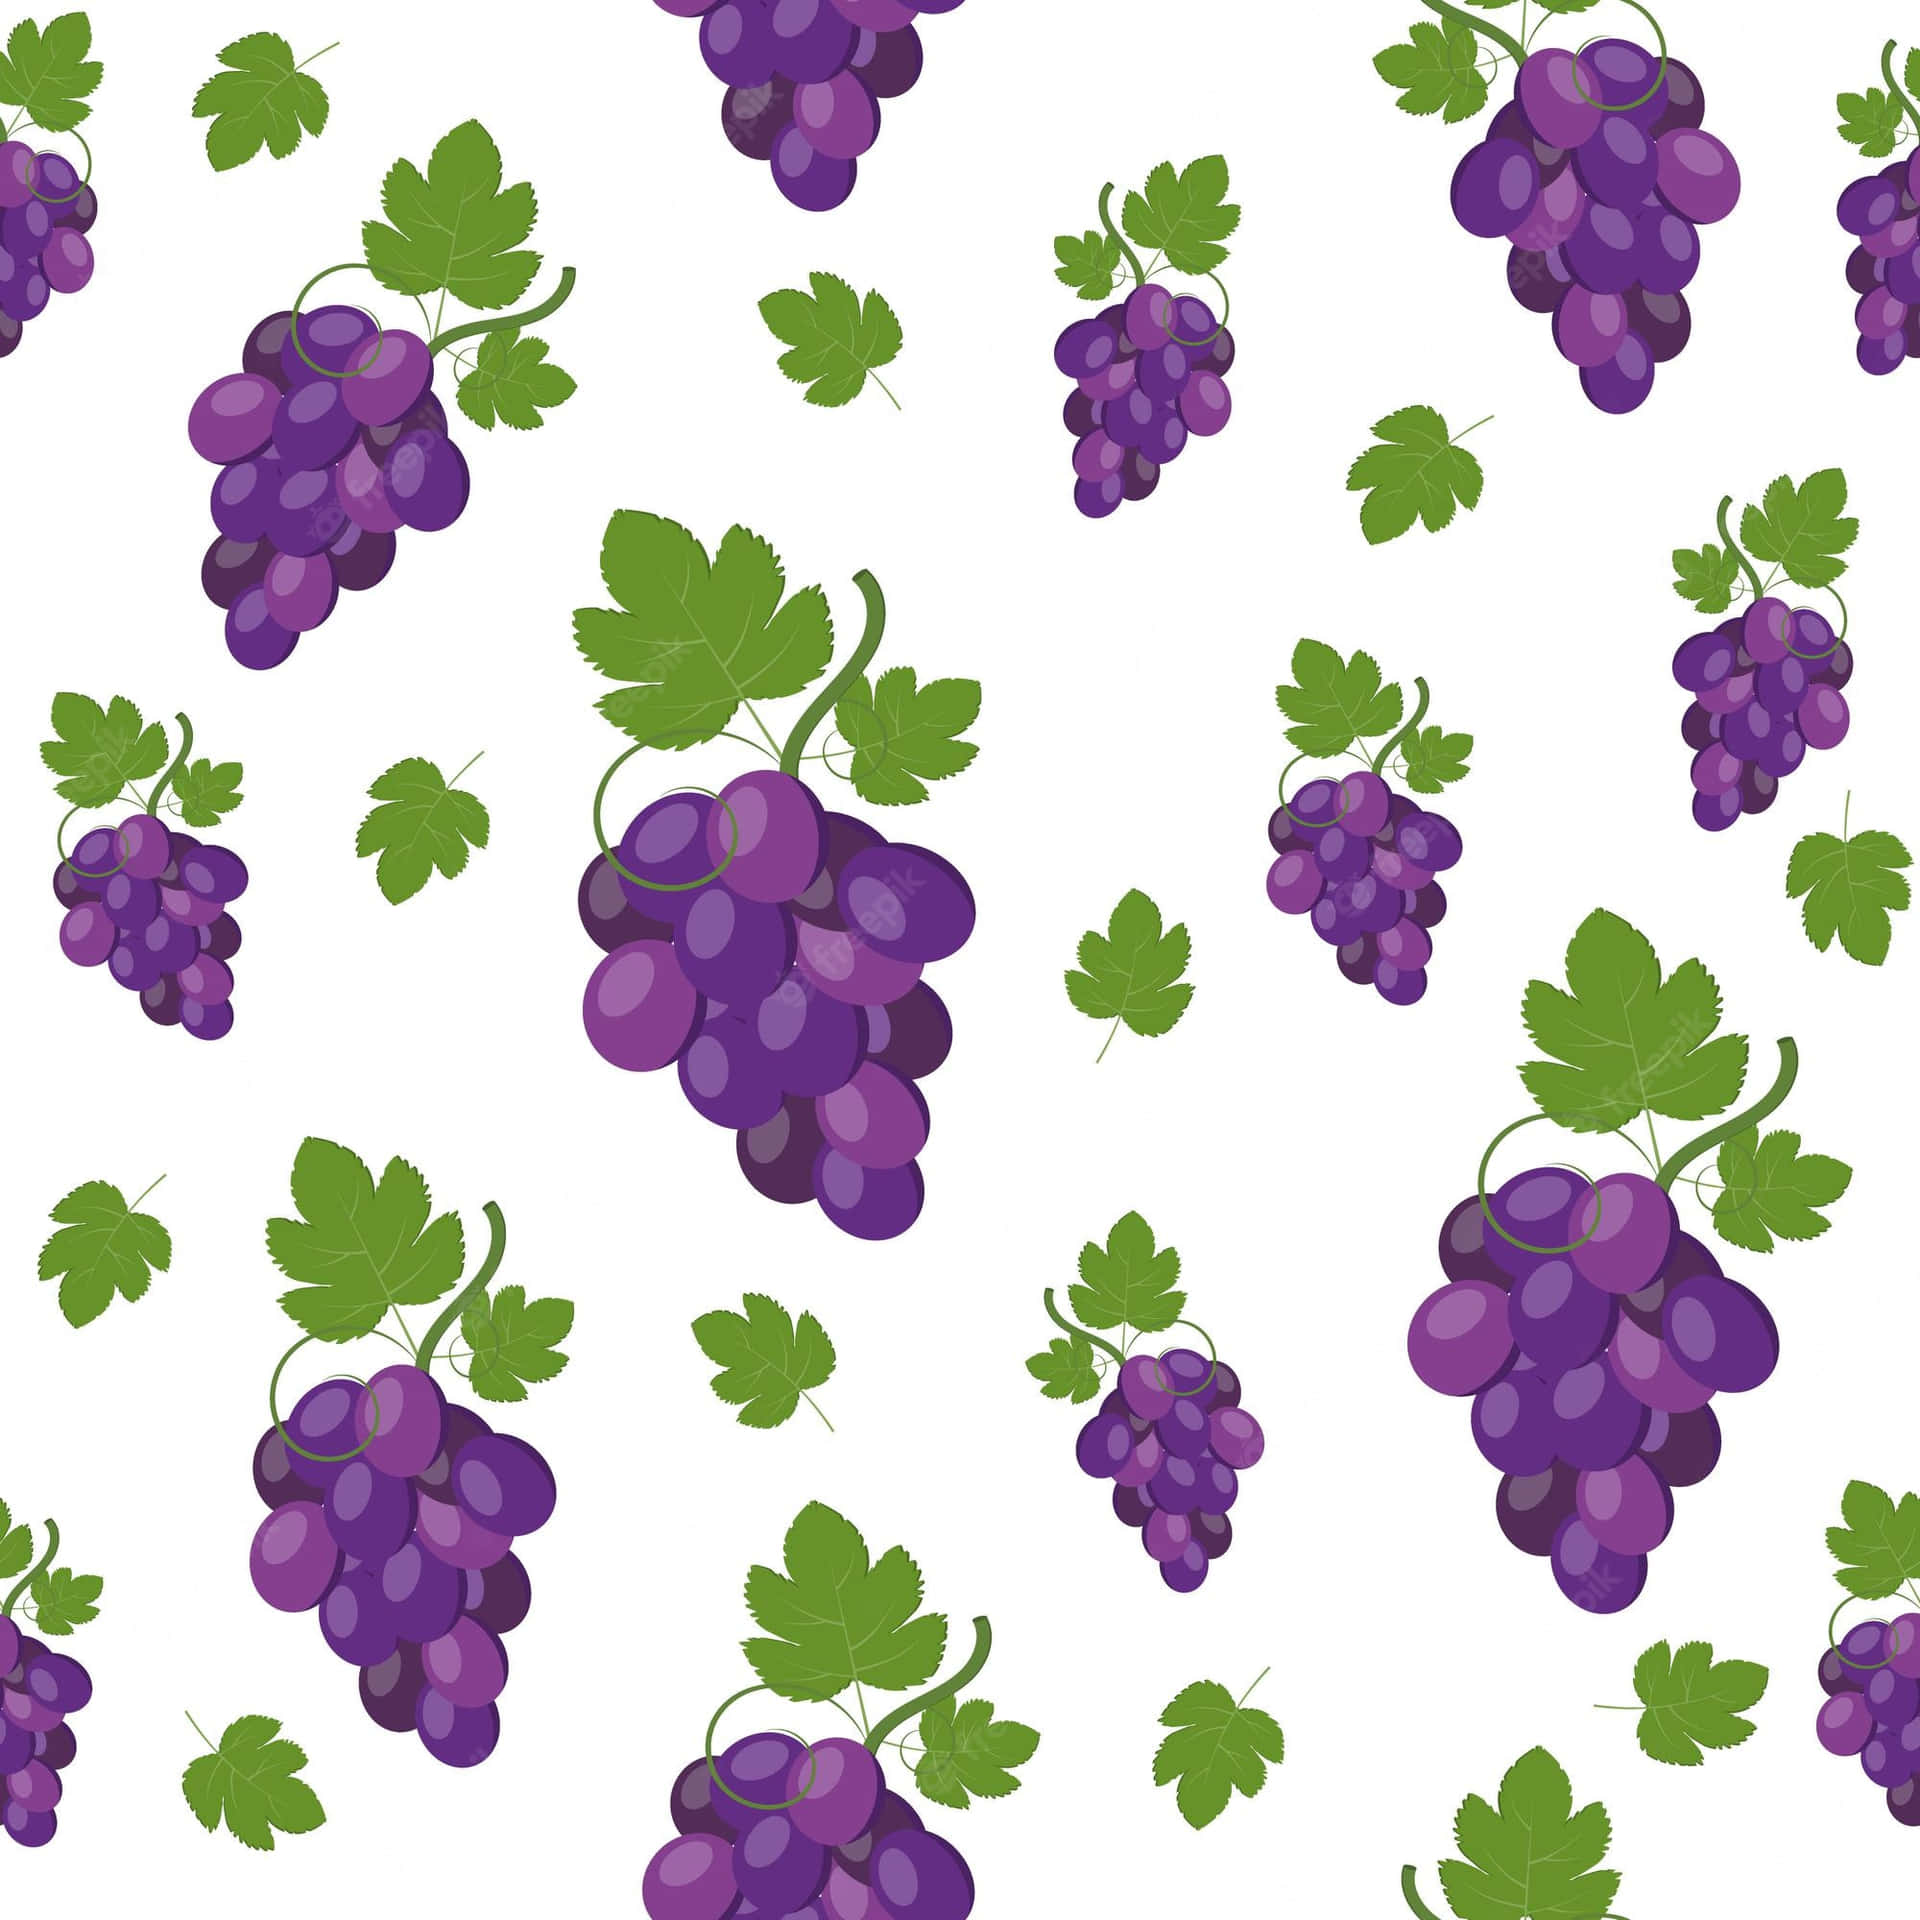 Fresh Grapes on a Vine